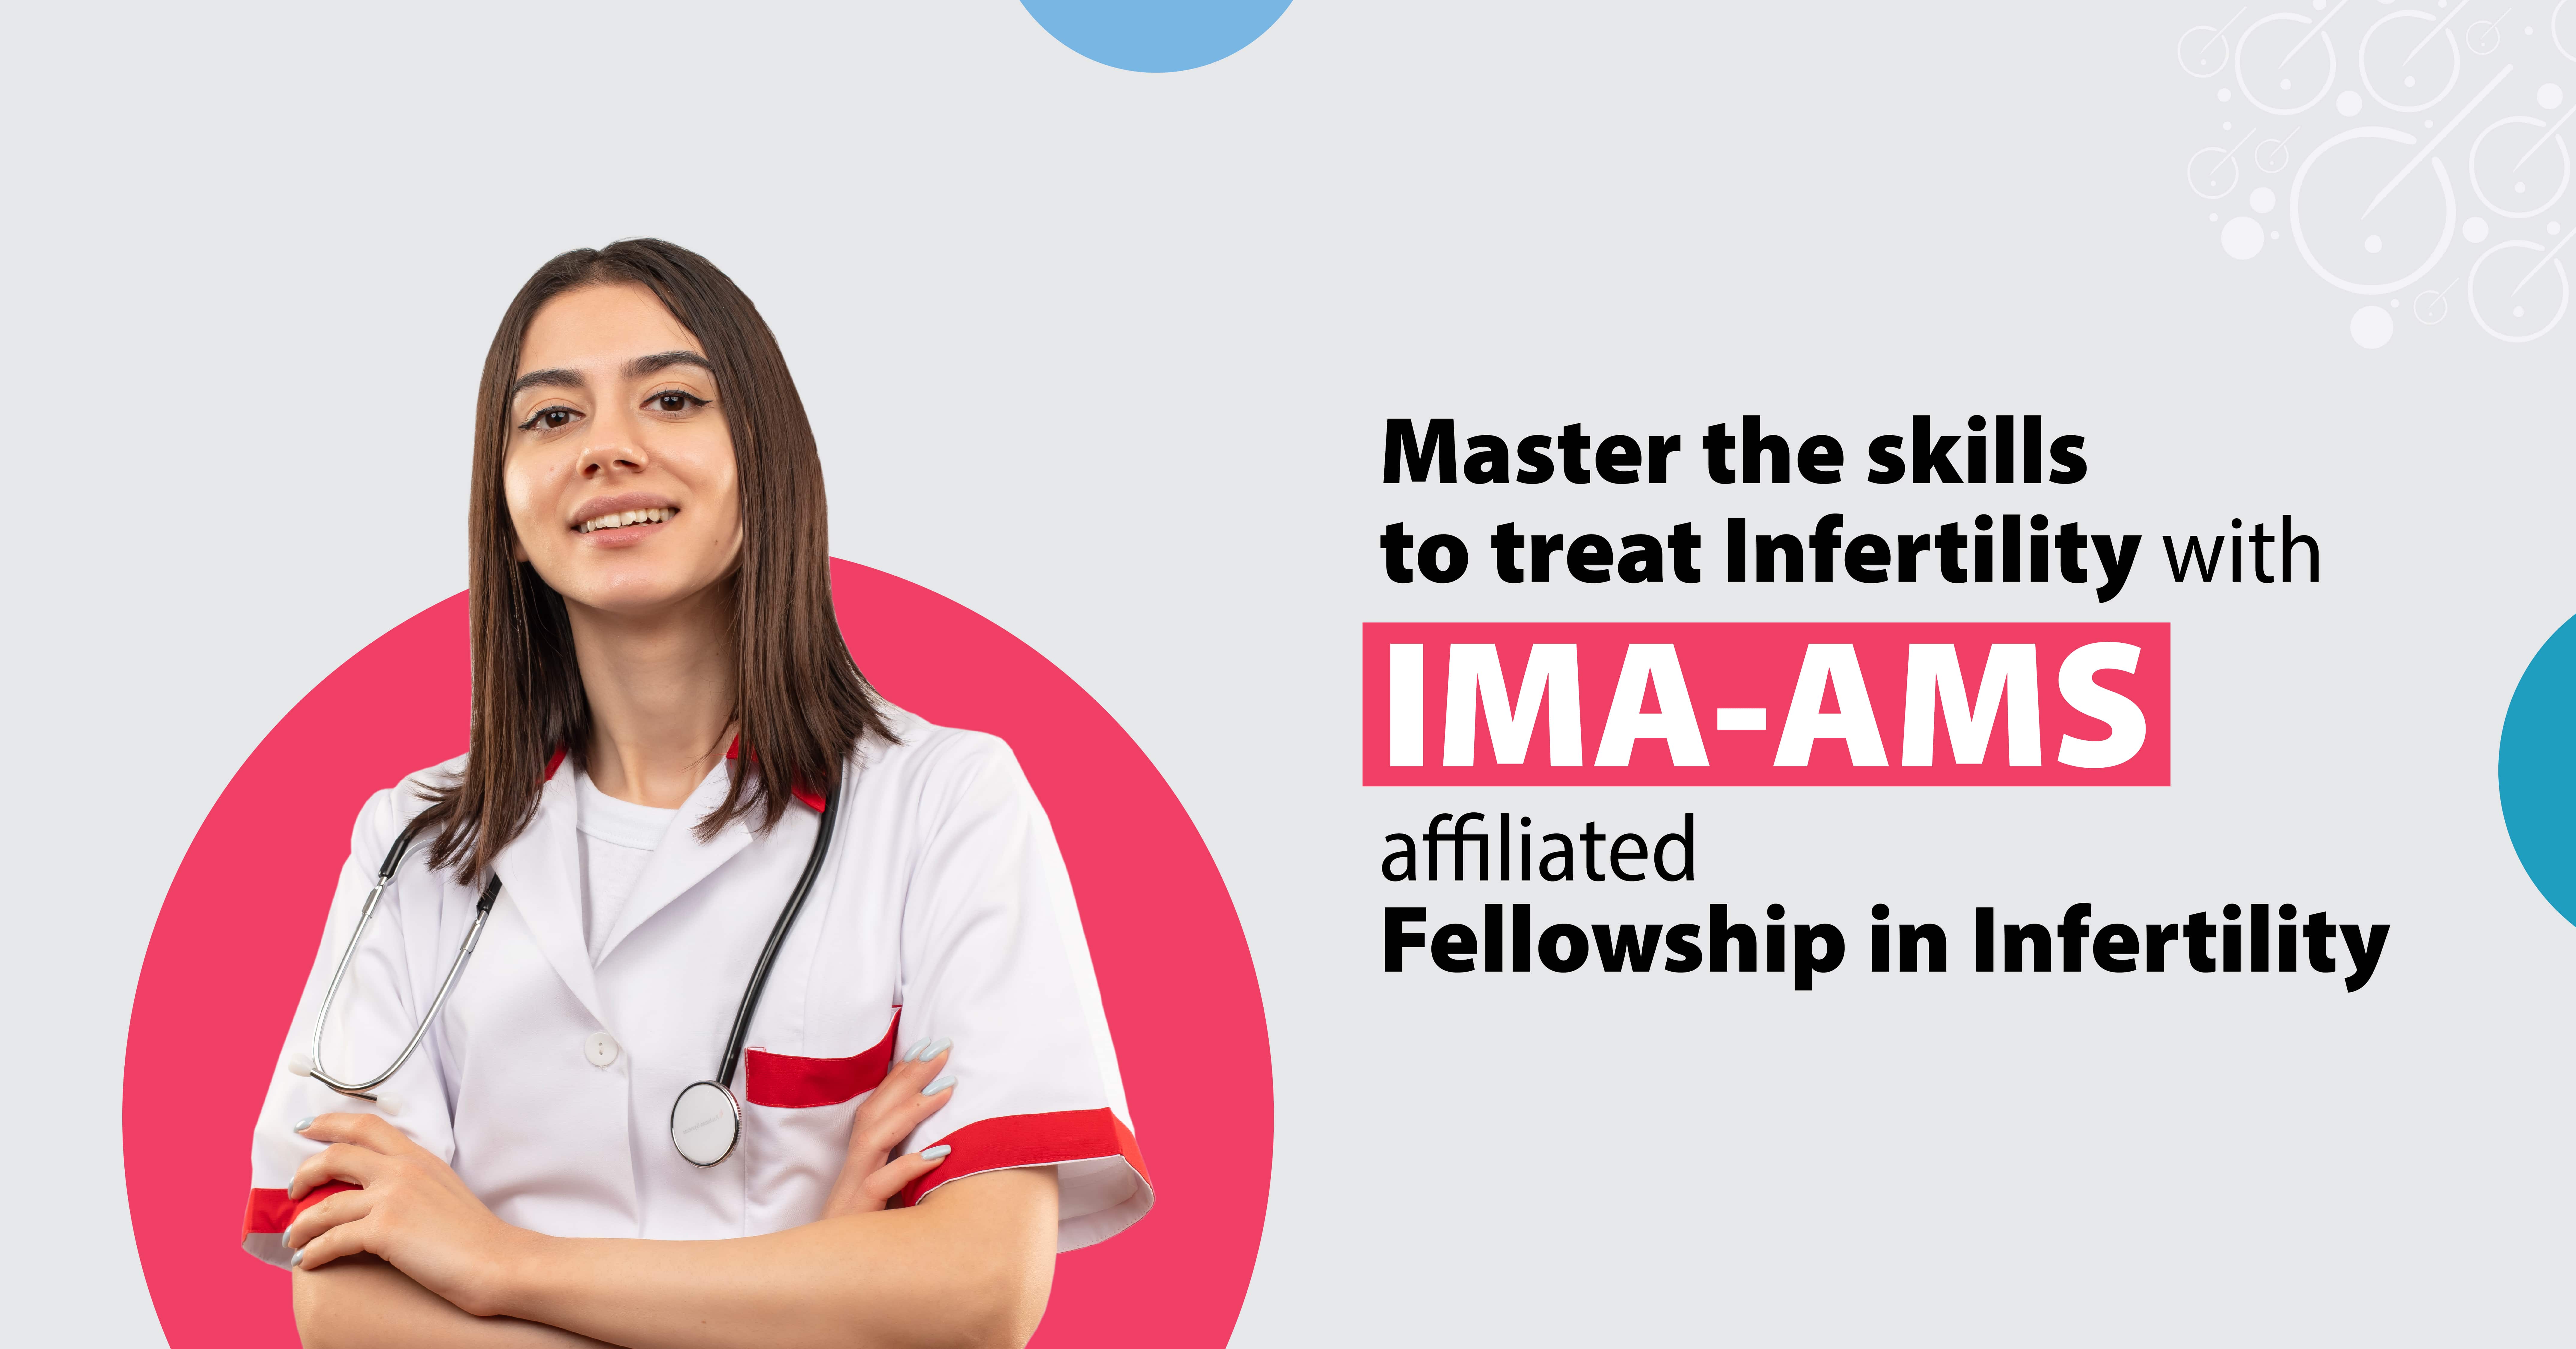 IMA-AMS Fellowship in Infertility